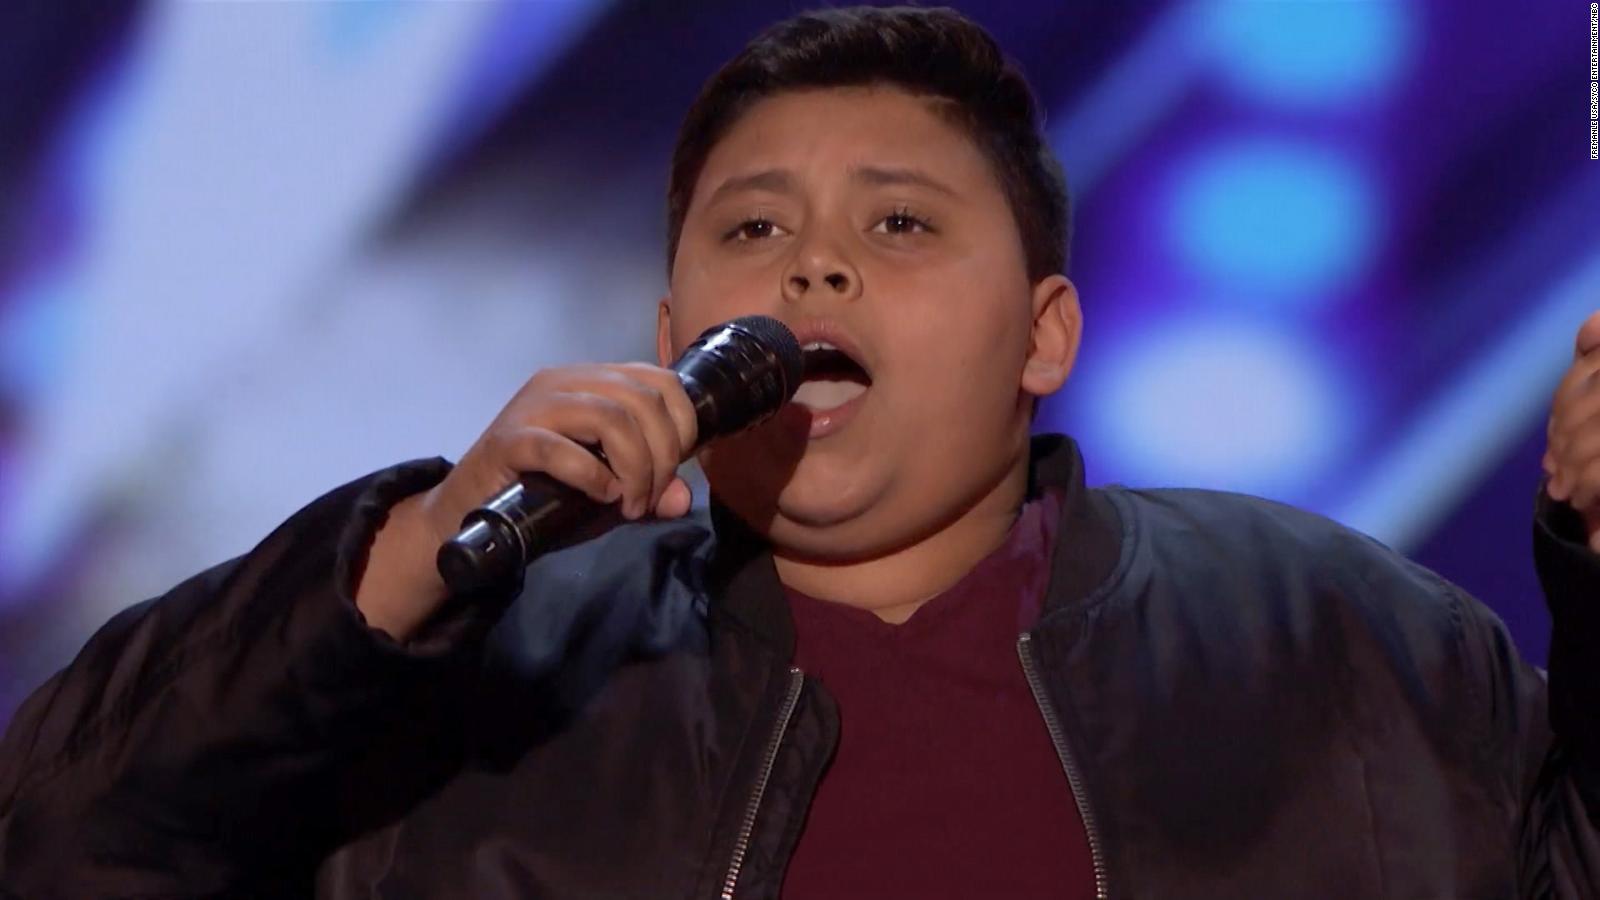 12-year-old Luke Islam stuns 'America's Got Talent' judge - CNN Video